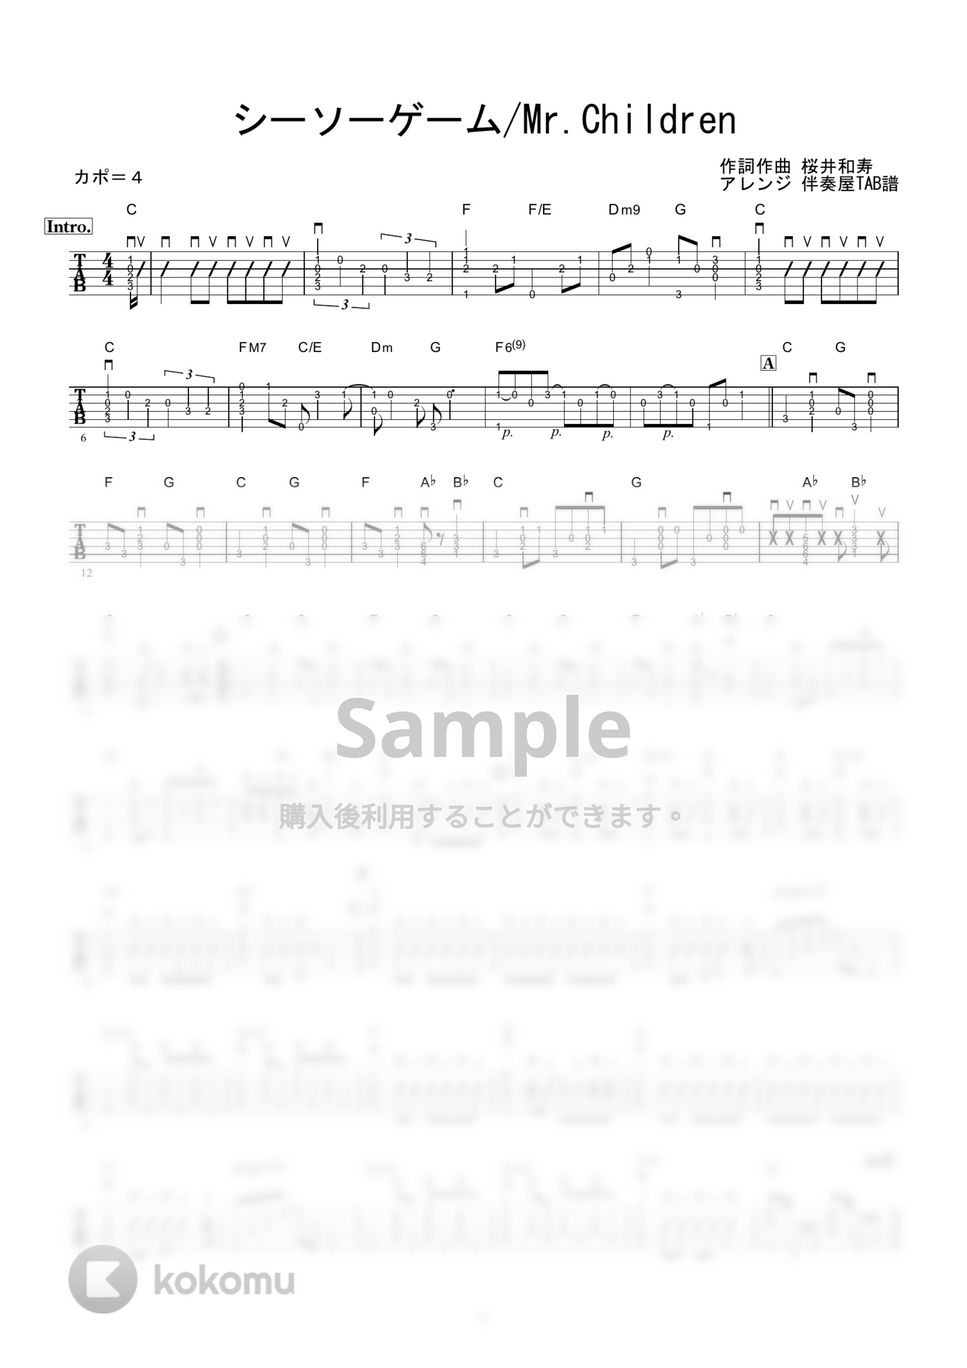 Mr. Children - シーソーゲーム (ギター伴奏/イントロ・間奏ソロギター) by 伴奏屋TAB譜